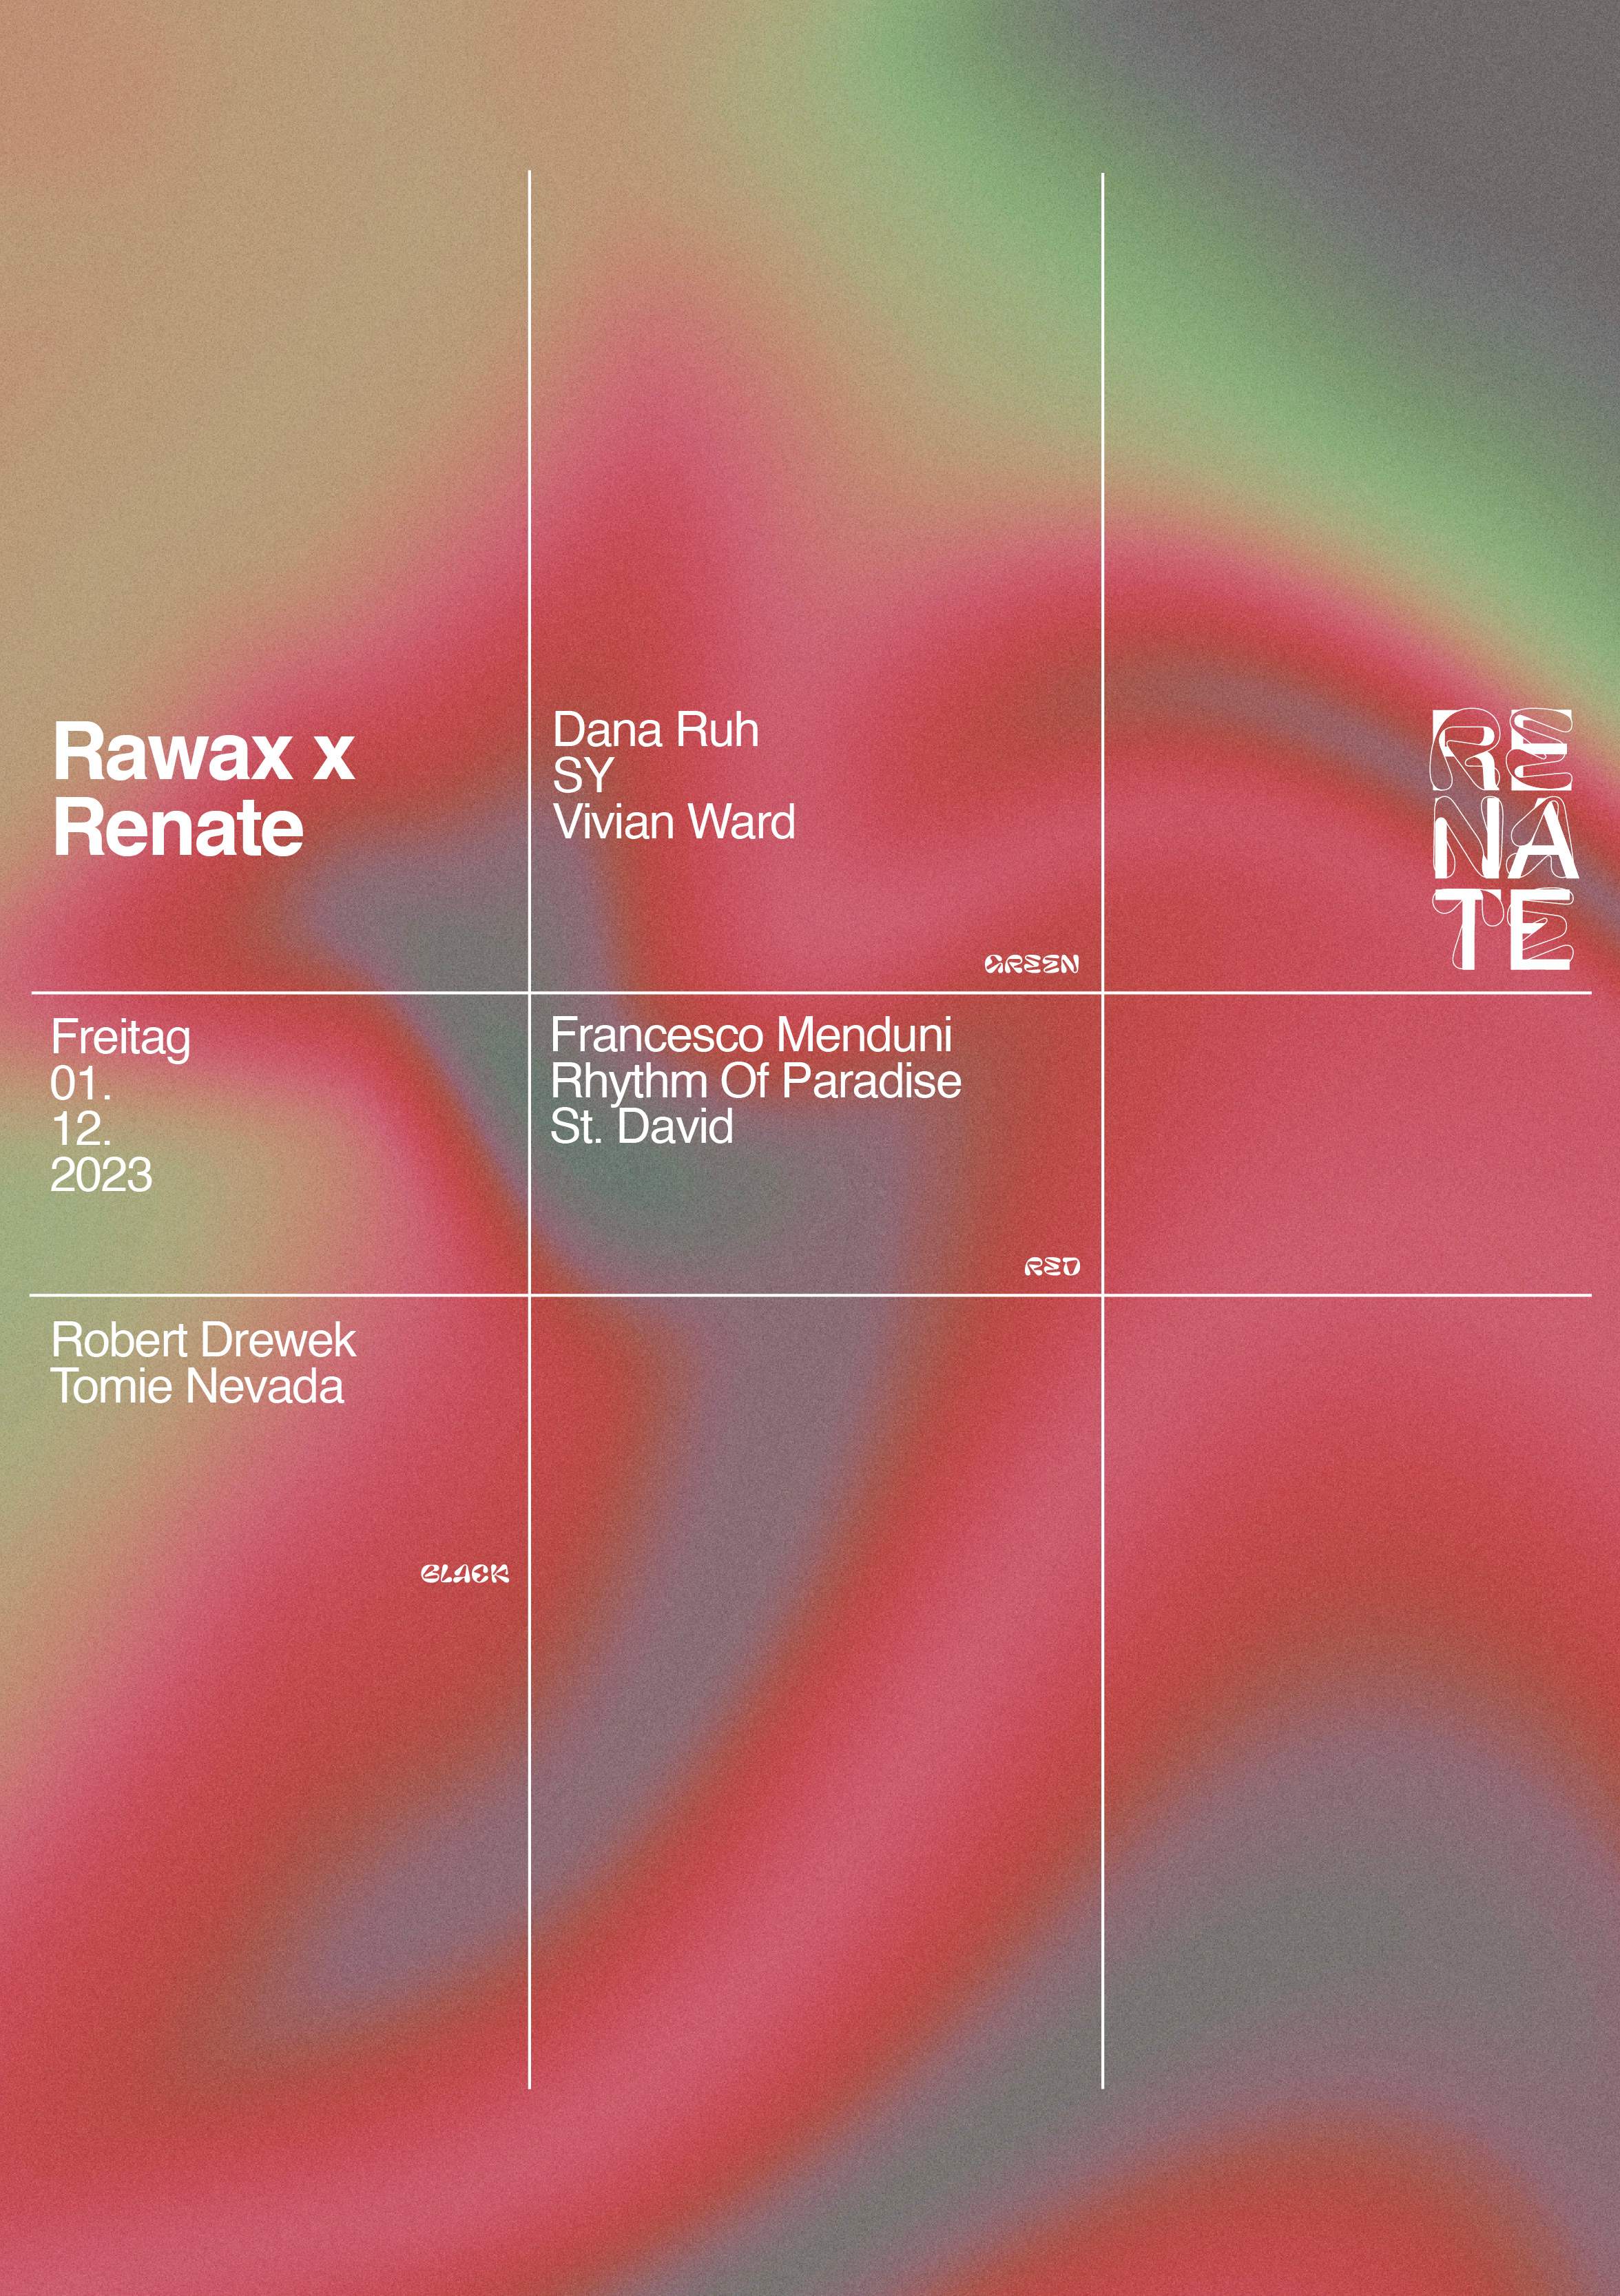 Rawax x Renate w/ Robert Drewek, Dana Ruh, SY, St. David, Vivian Ward + more - フライヤー表